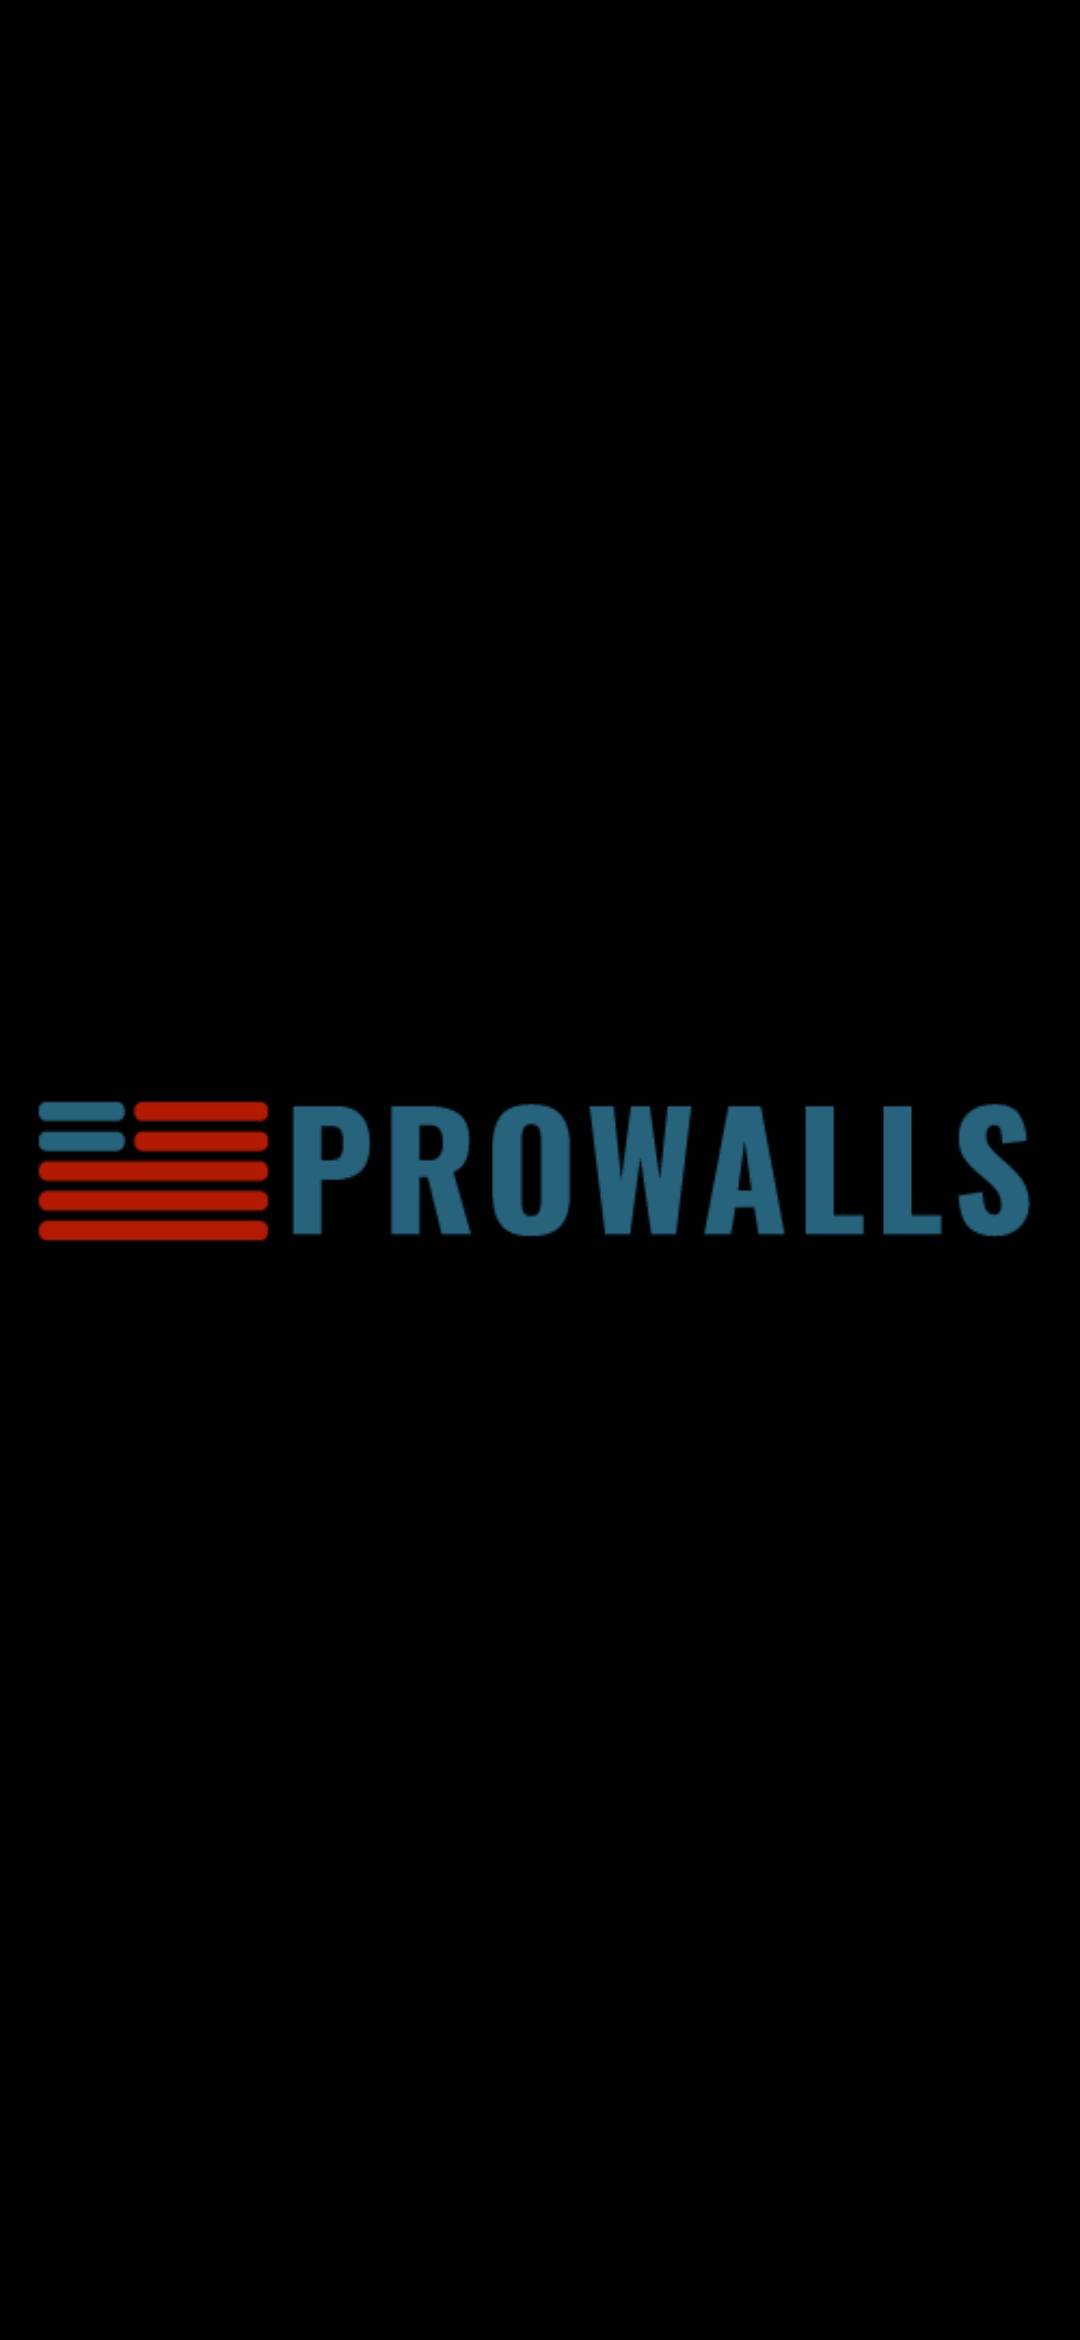 Prowalls Logo